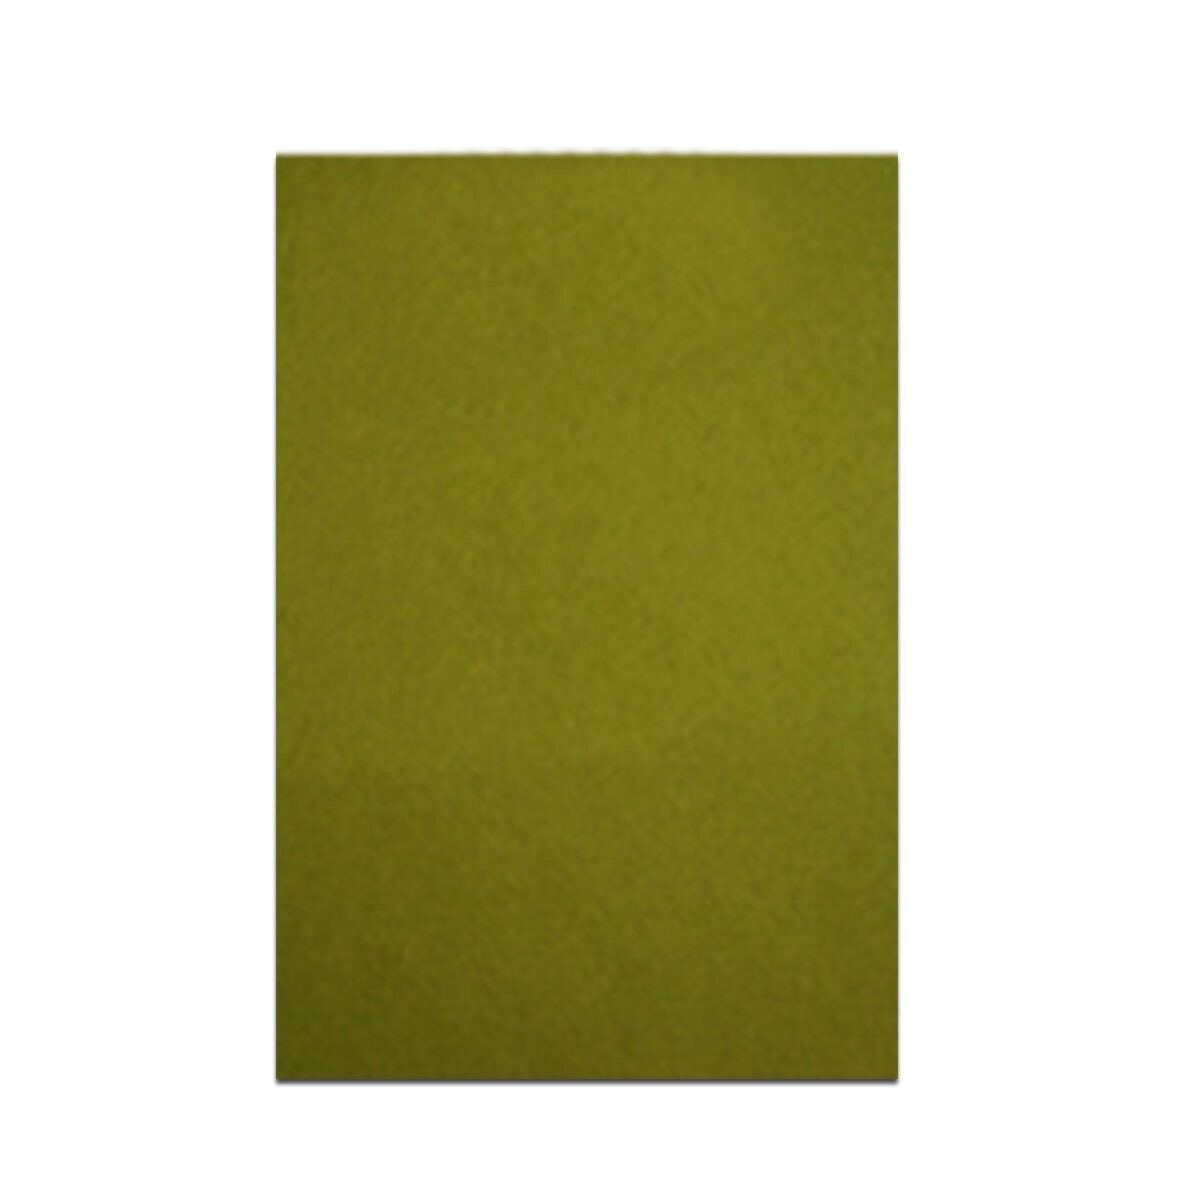 Wollfilz, Grün-Töne, 1mm dick, 100%iger Wollfilz, Platten zu 20 x 30 cm